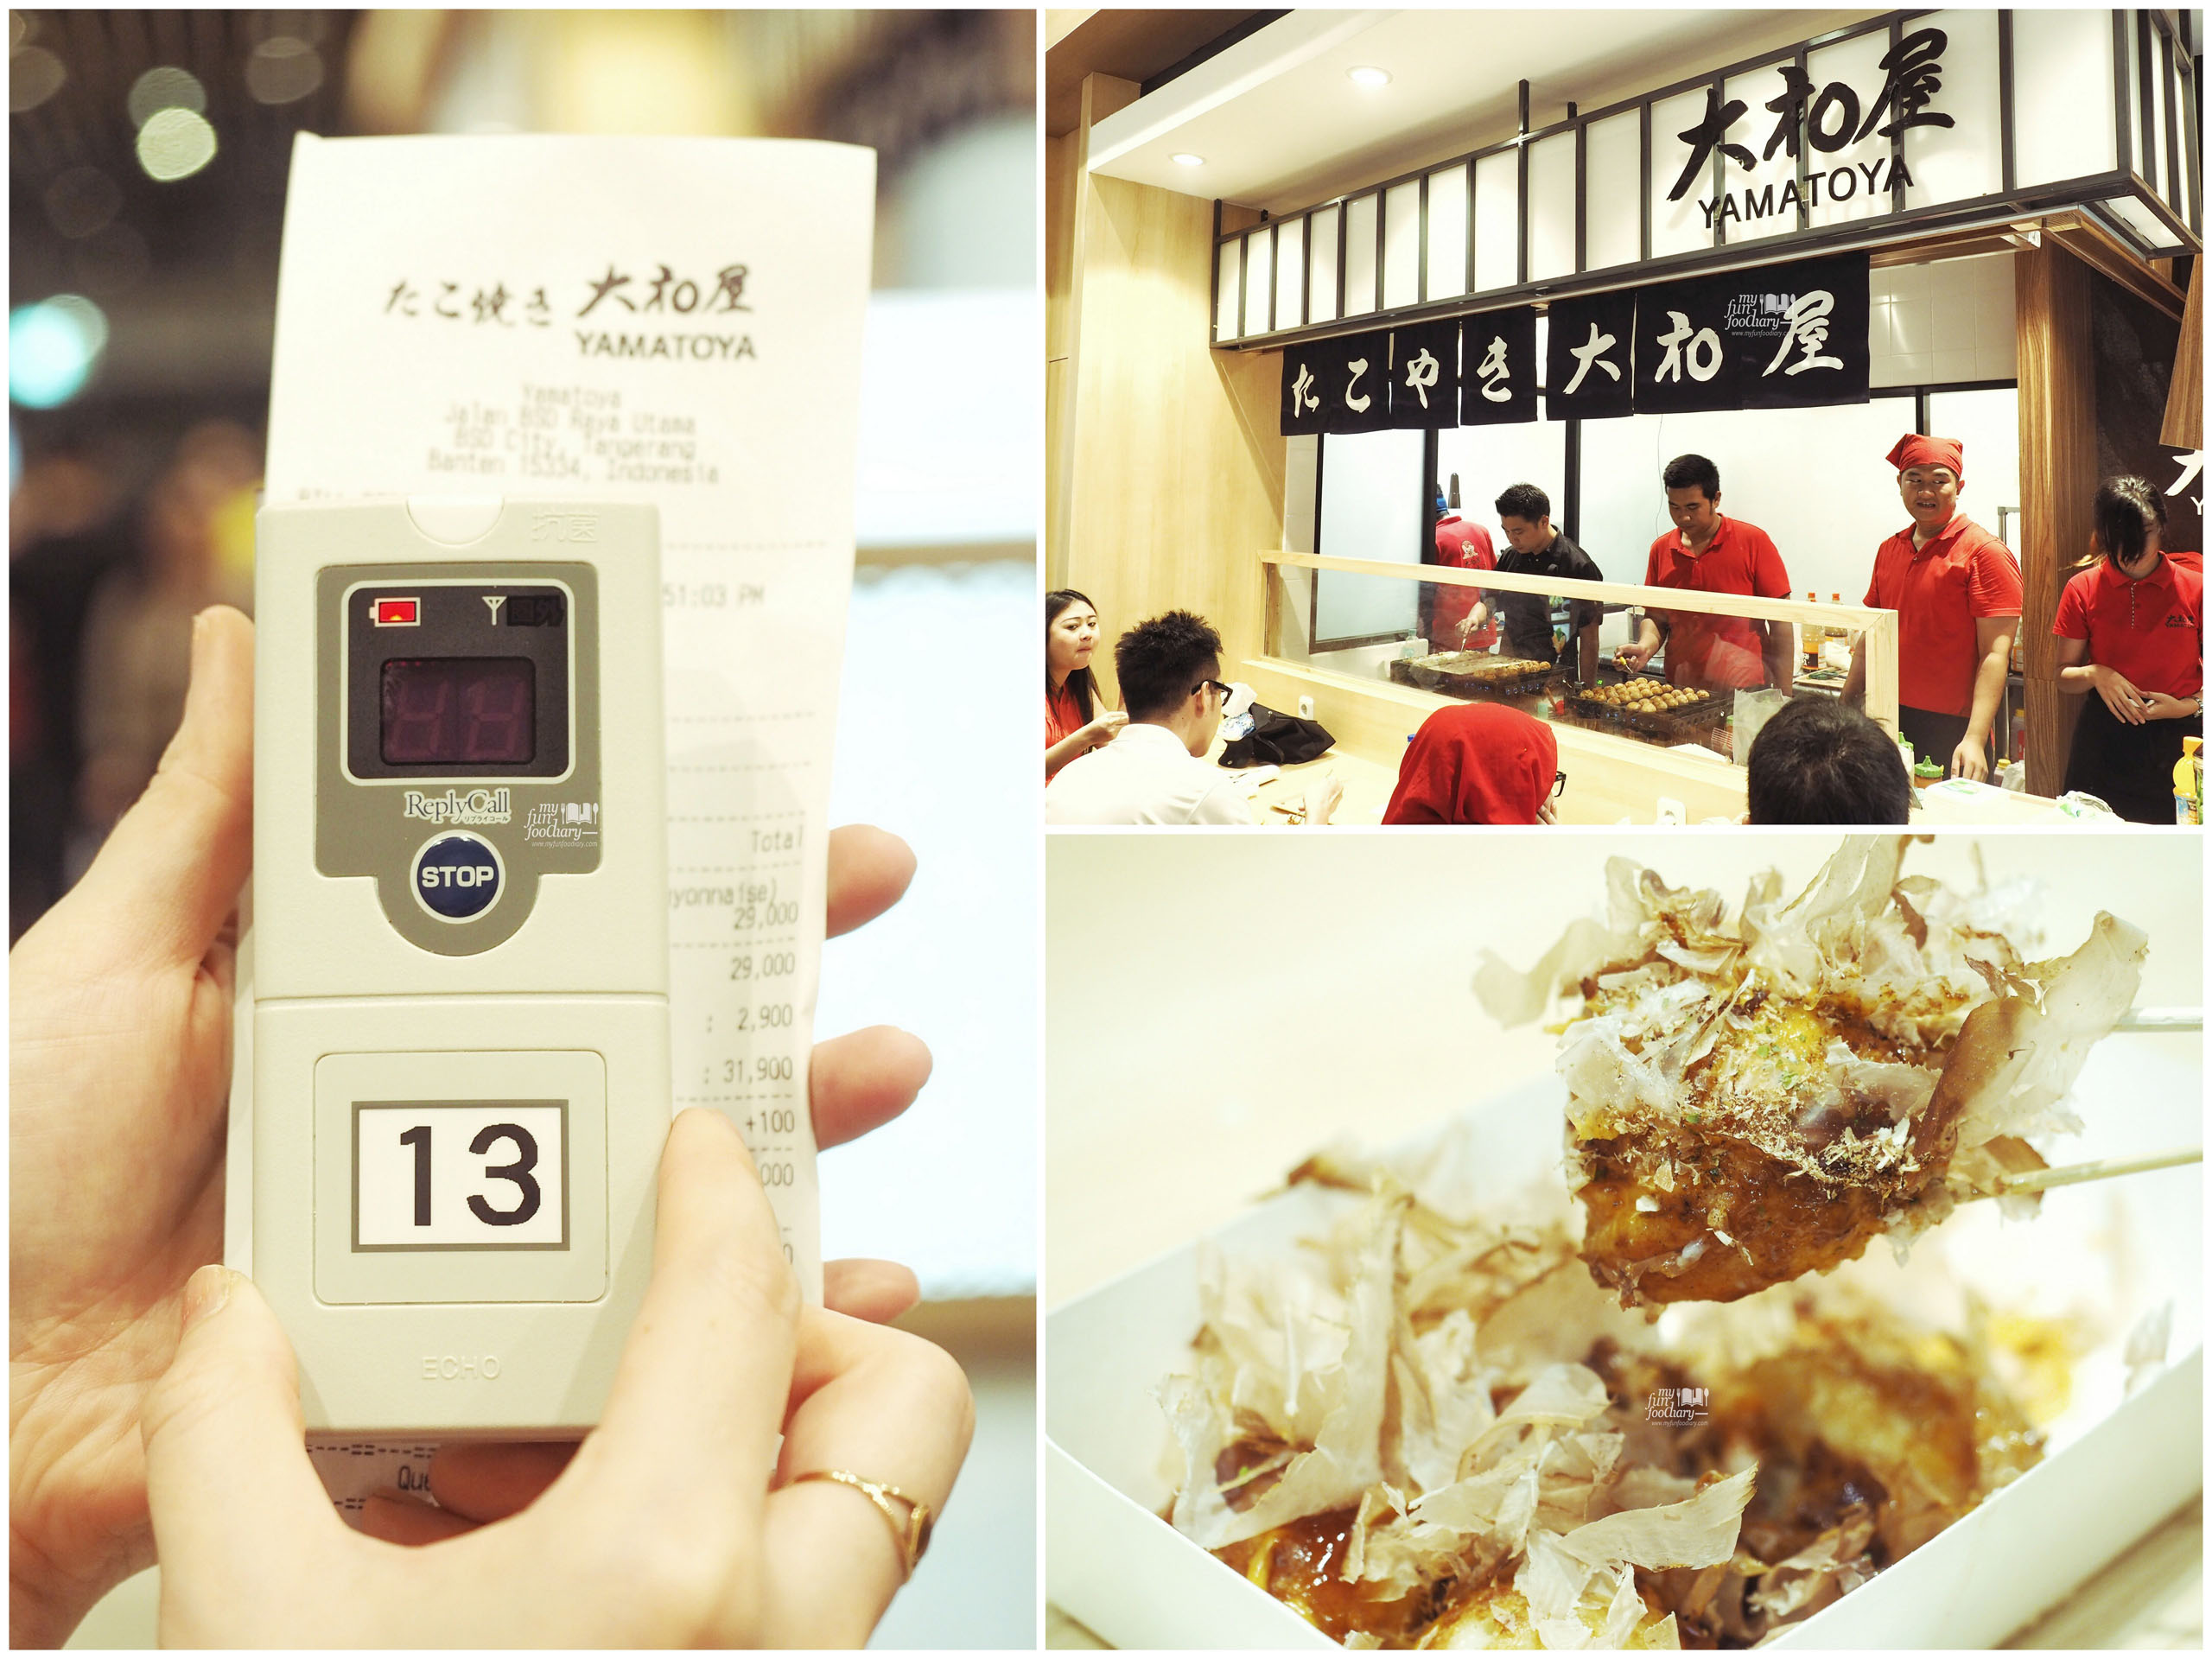 Takoyaki at Yamatoya at The Food Culture AEON Mall by Myfunfoodiary collage